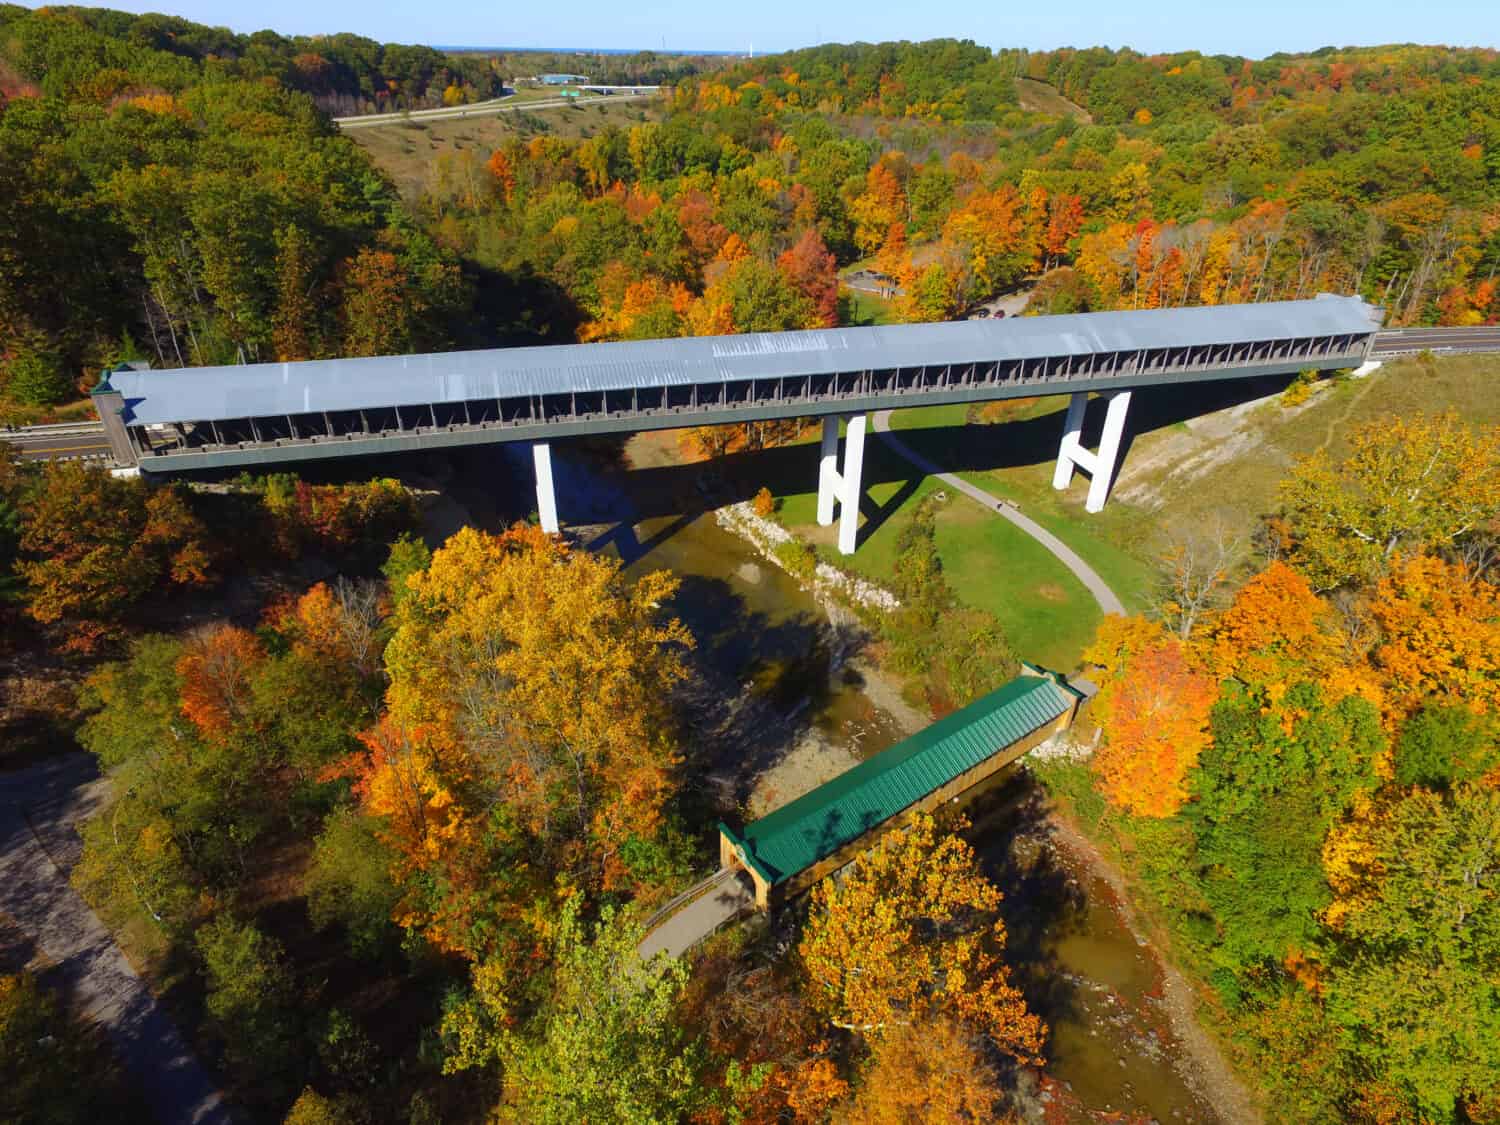 Scenic covered bridge in Ashtabula County, Ohio. The Smolen-Gulf Bridge is the longest covered wooden bridge in the US.